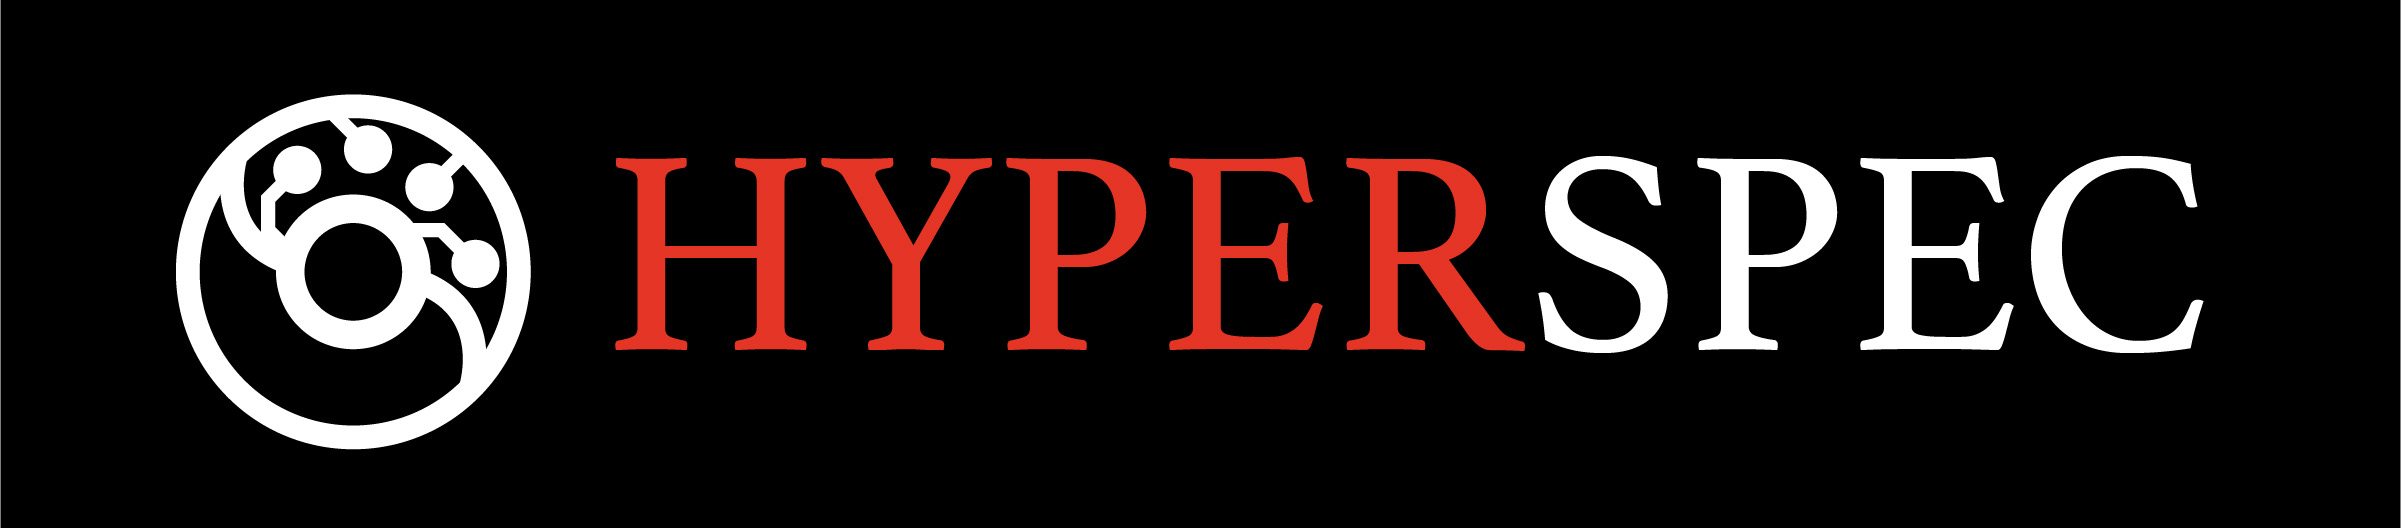 Hyperspec Logo Banner